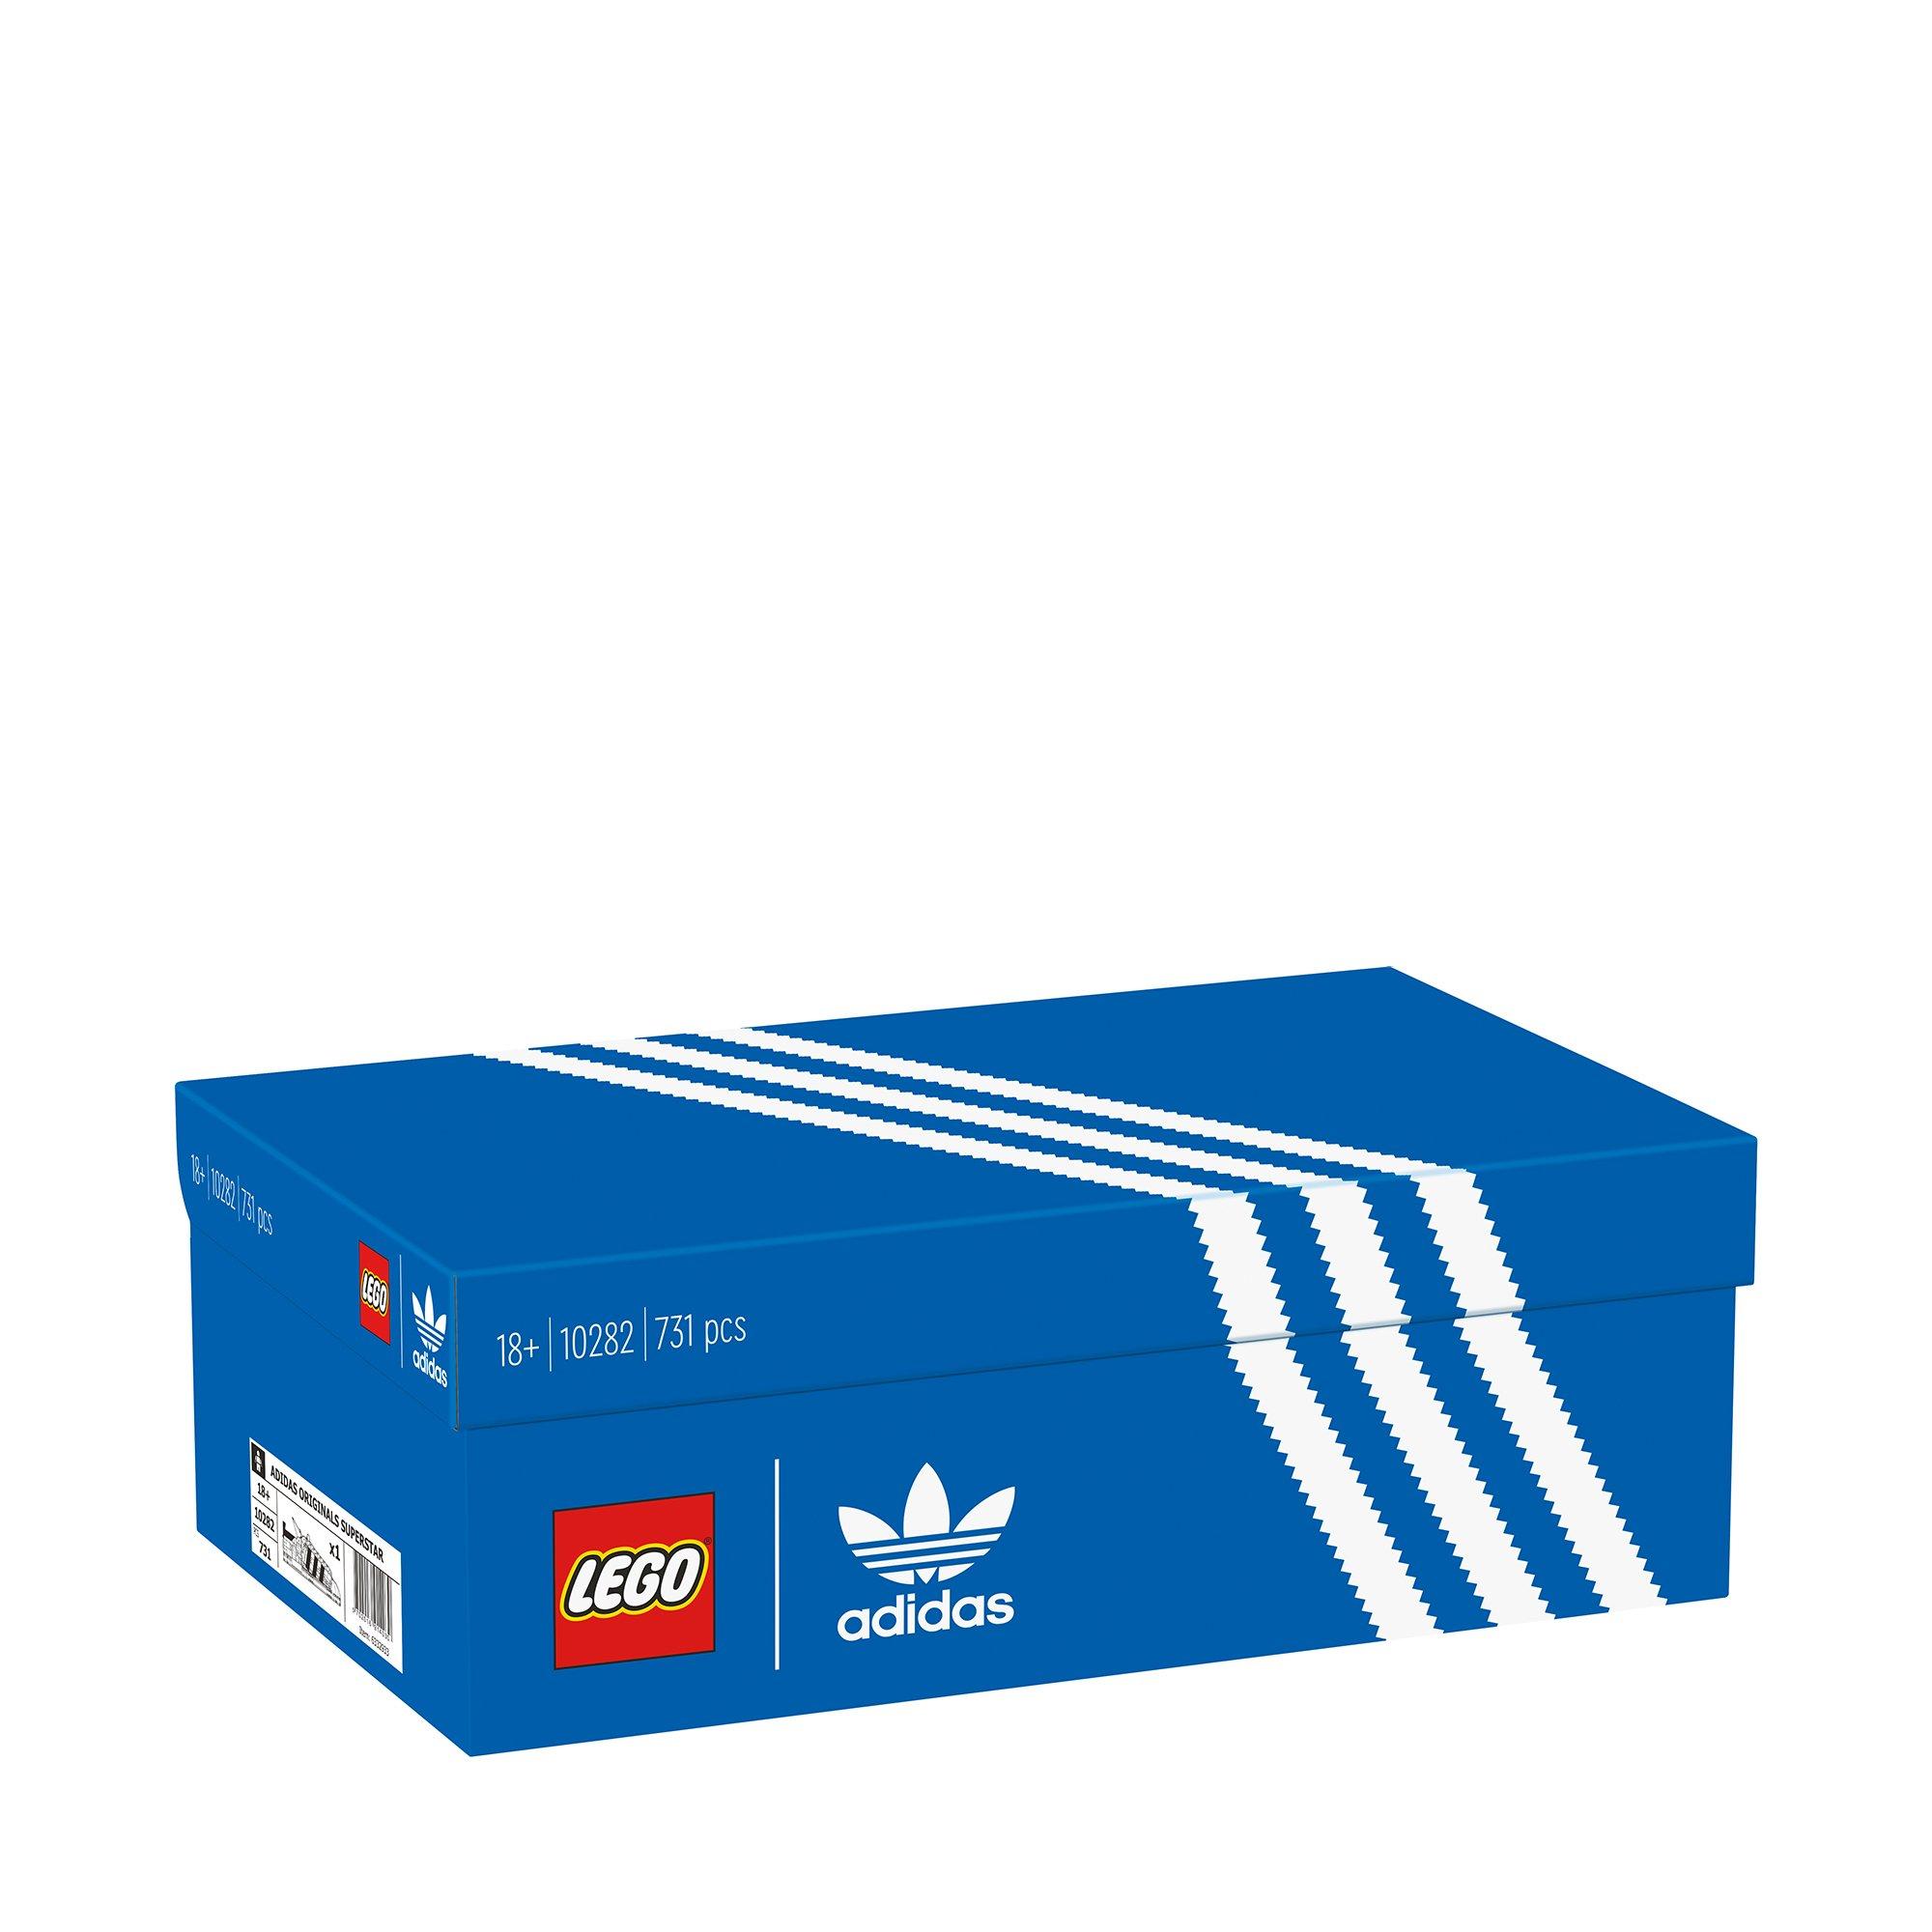 Image of LEGO 10282 Adidas Originals Superstar